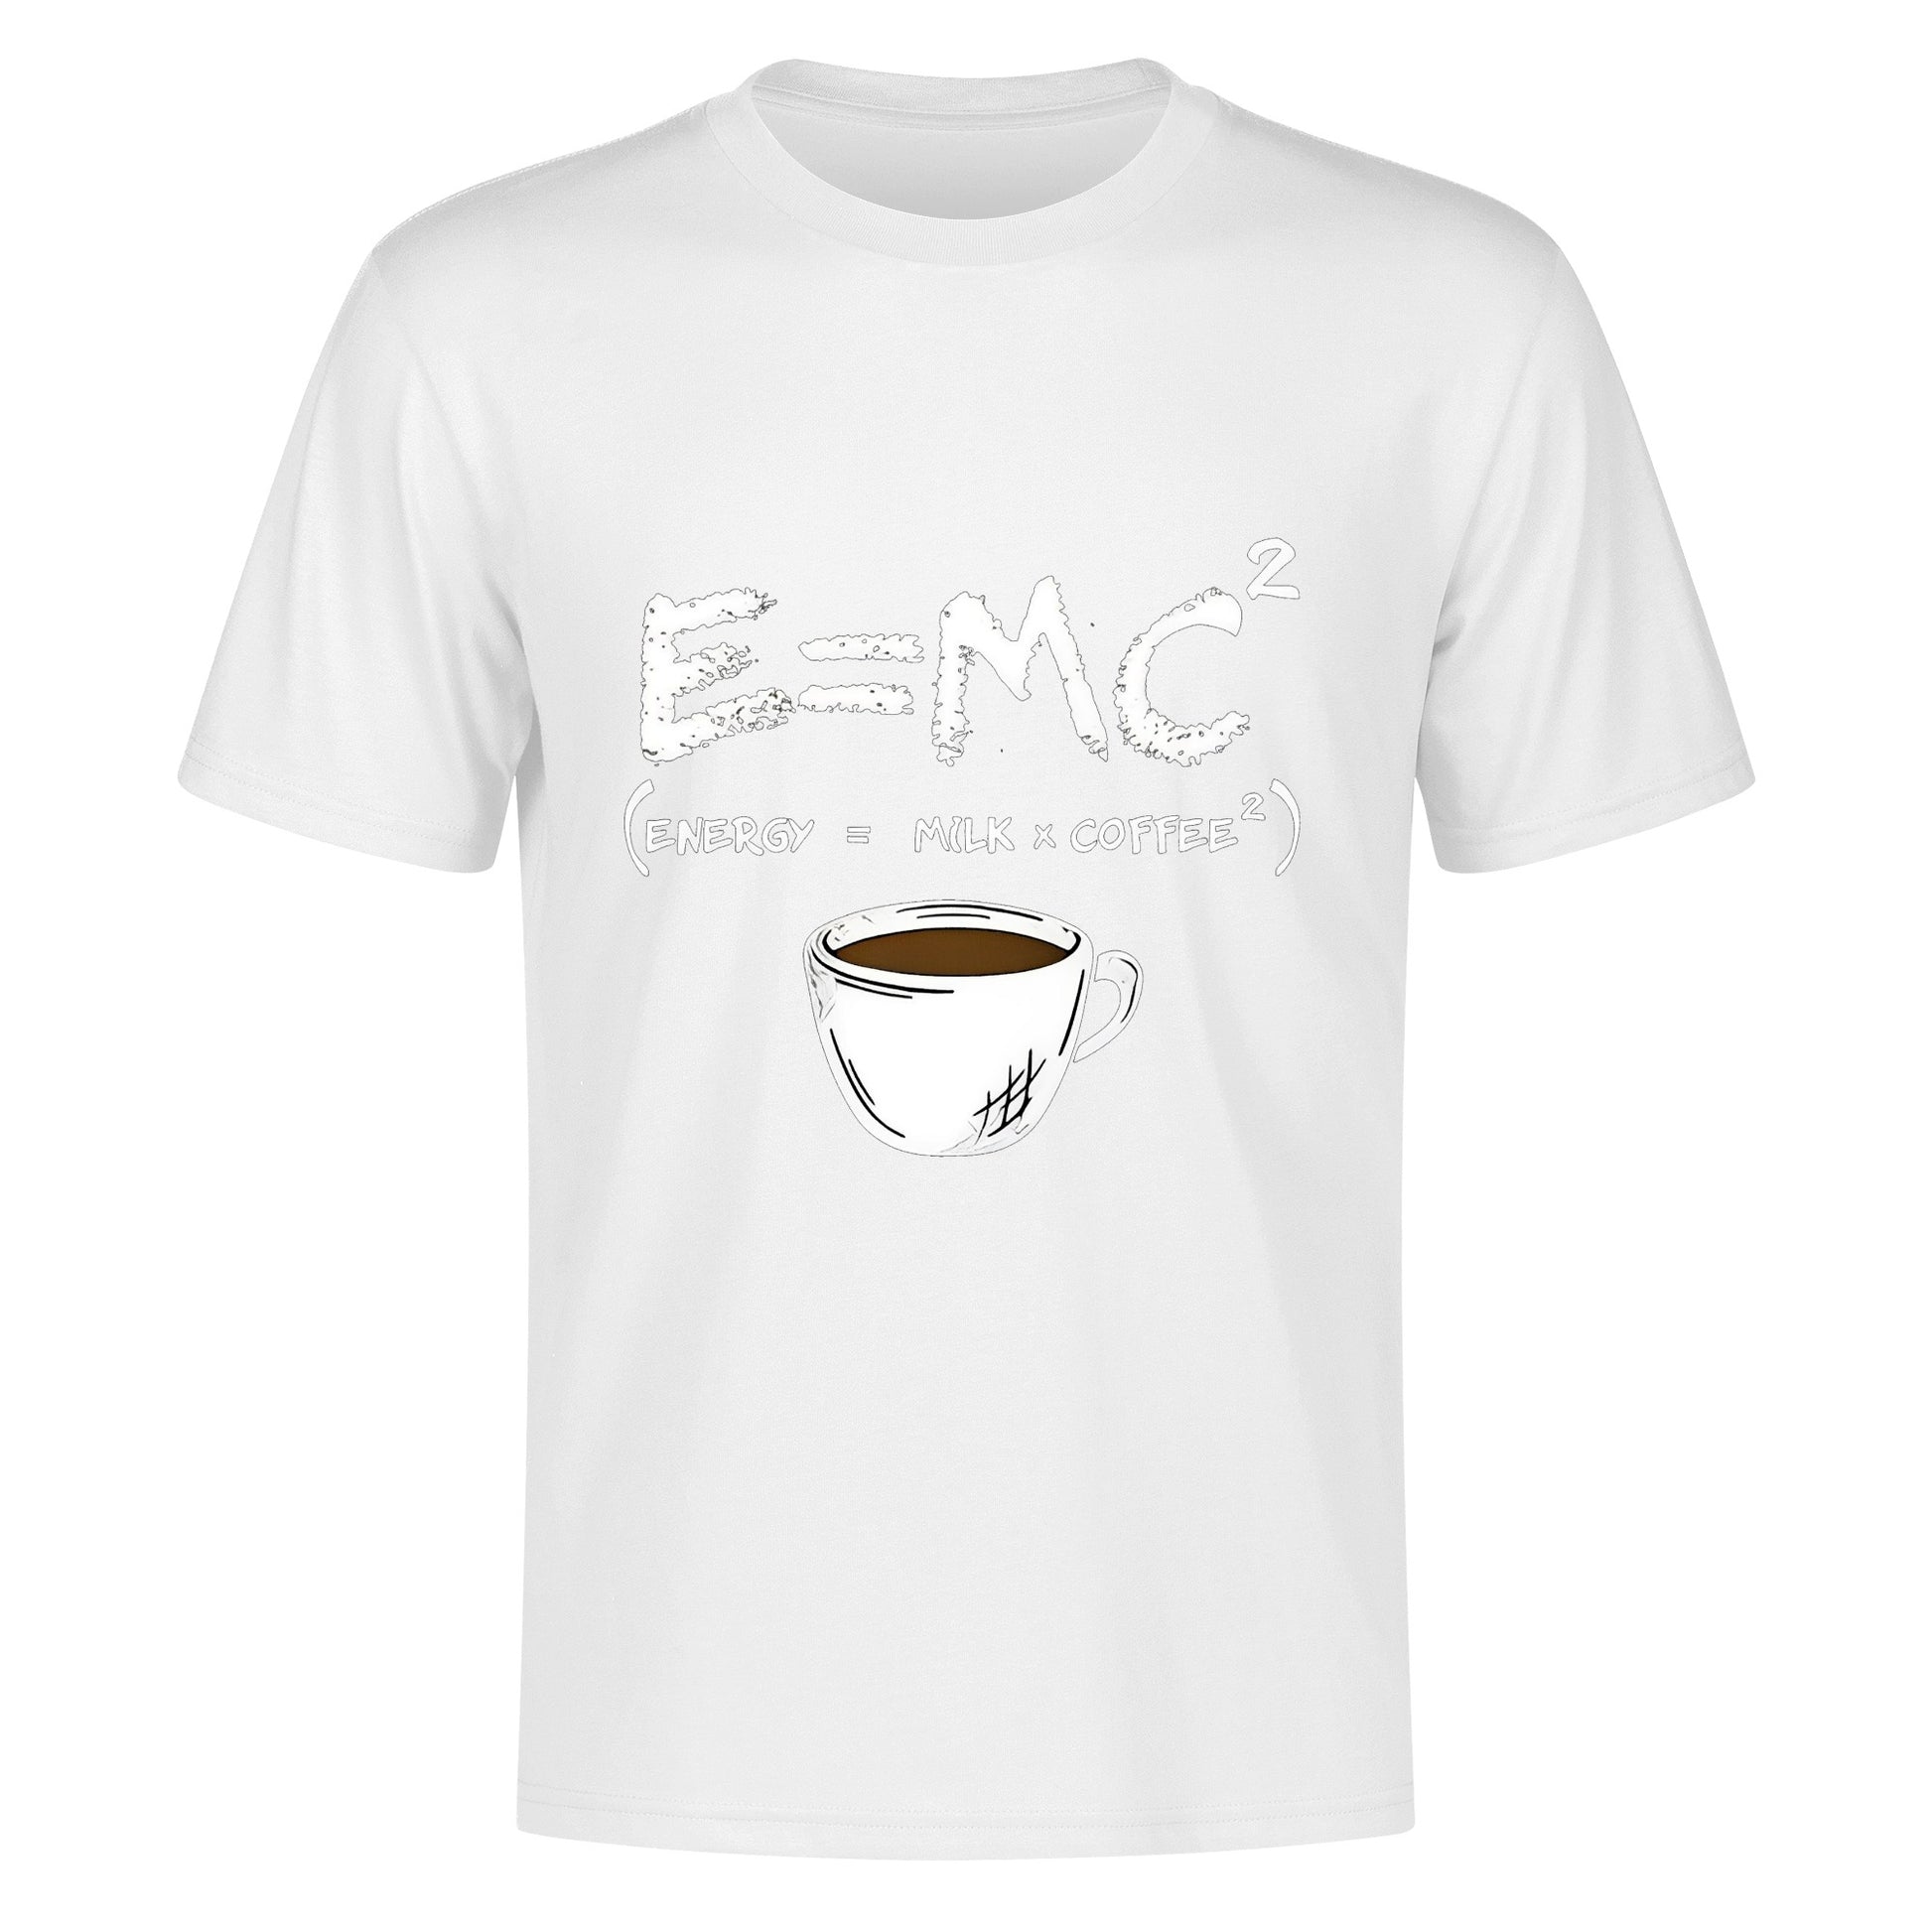 T-Shirt energy equals milk times coffee squared DrinkandArt